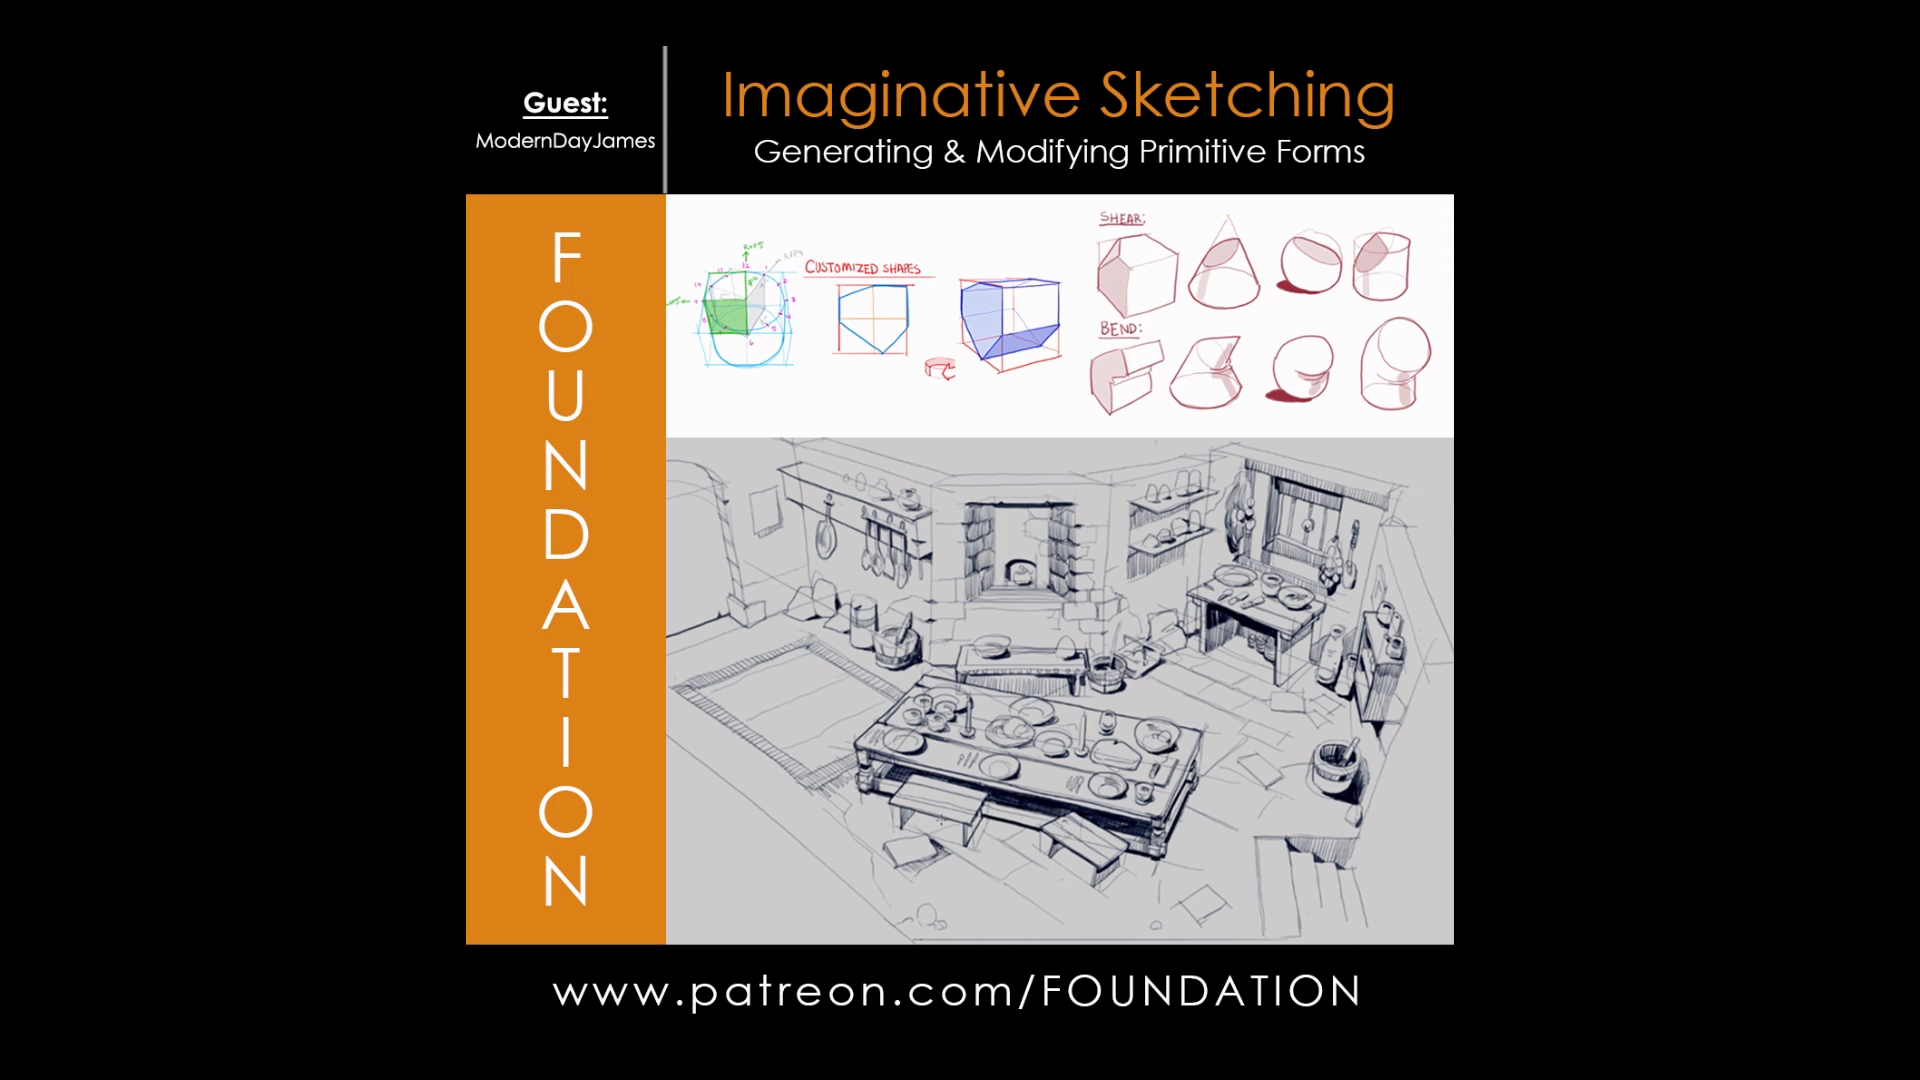 Imaginative Sketching – Generating & Modifying Primitive Forms with ModernDayJames